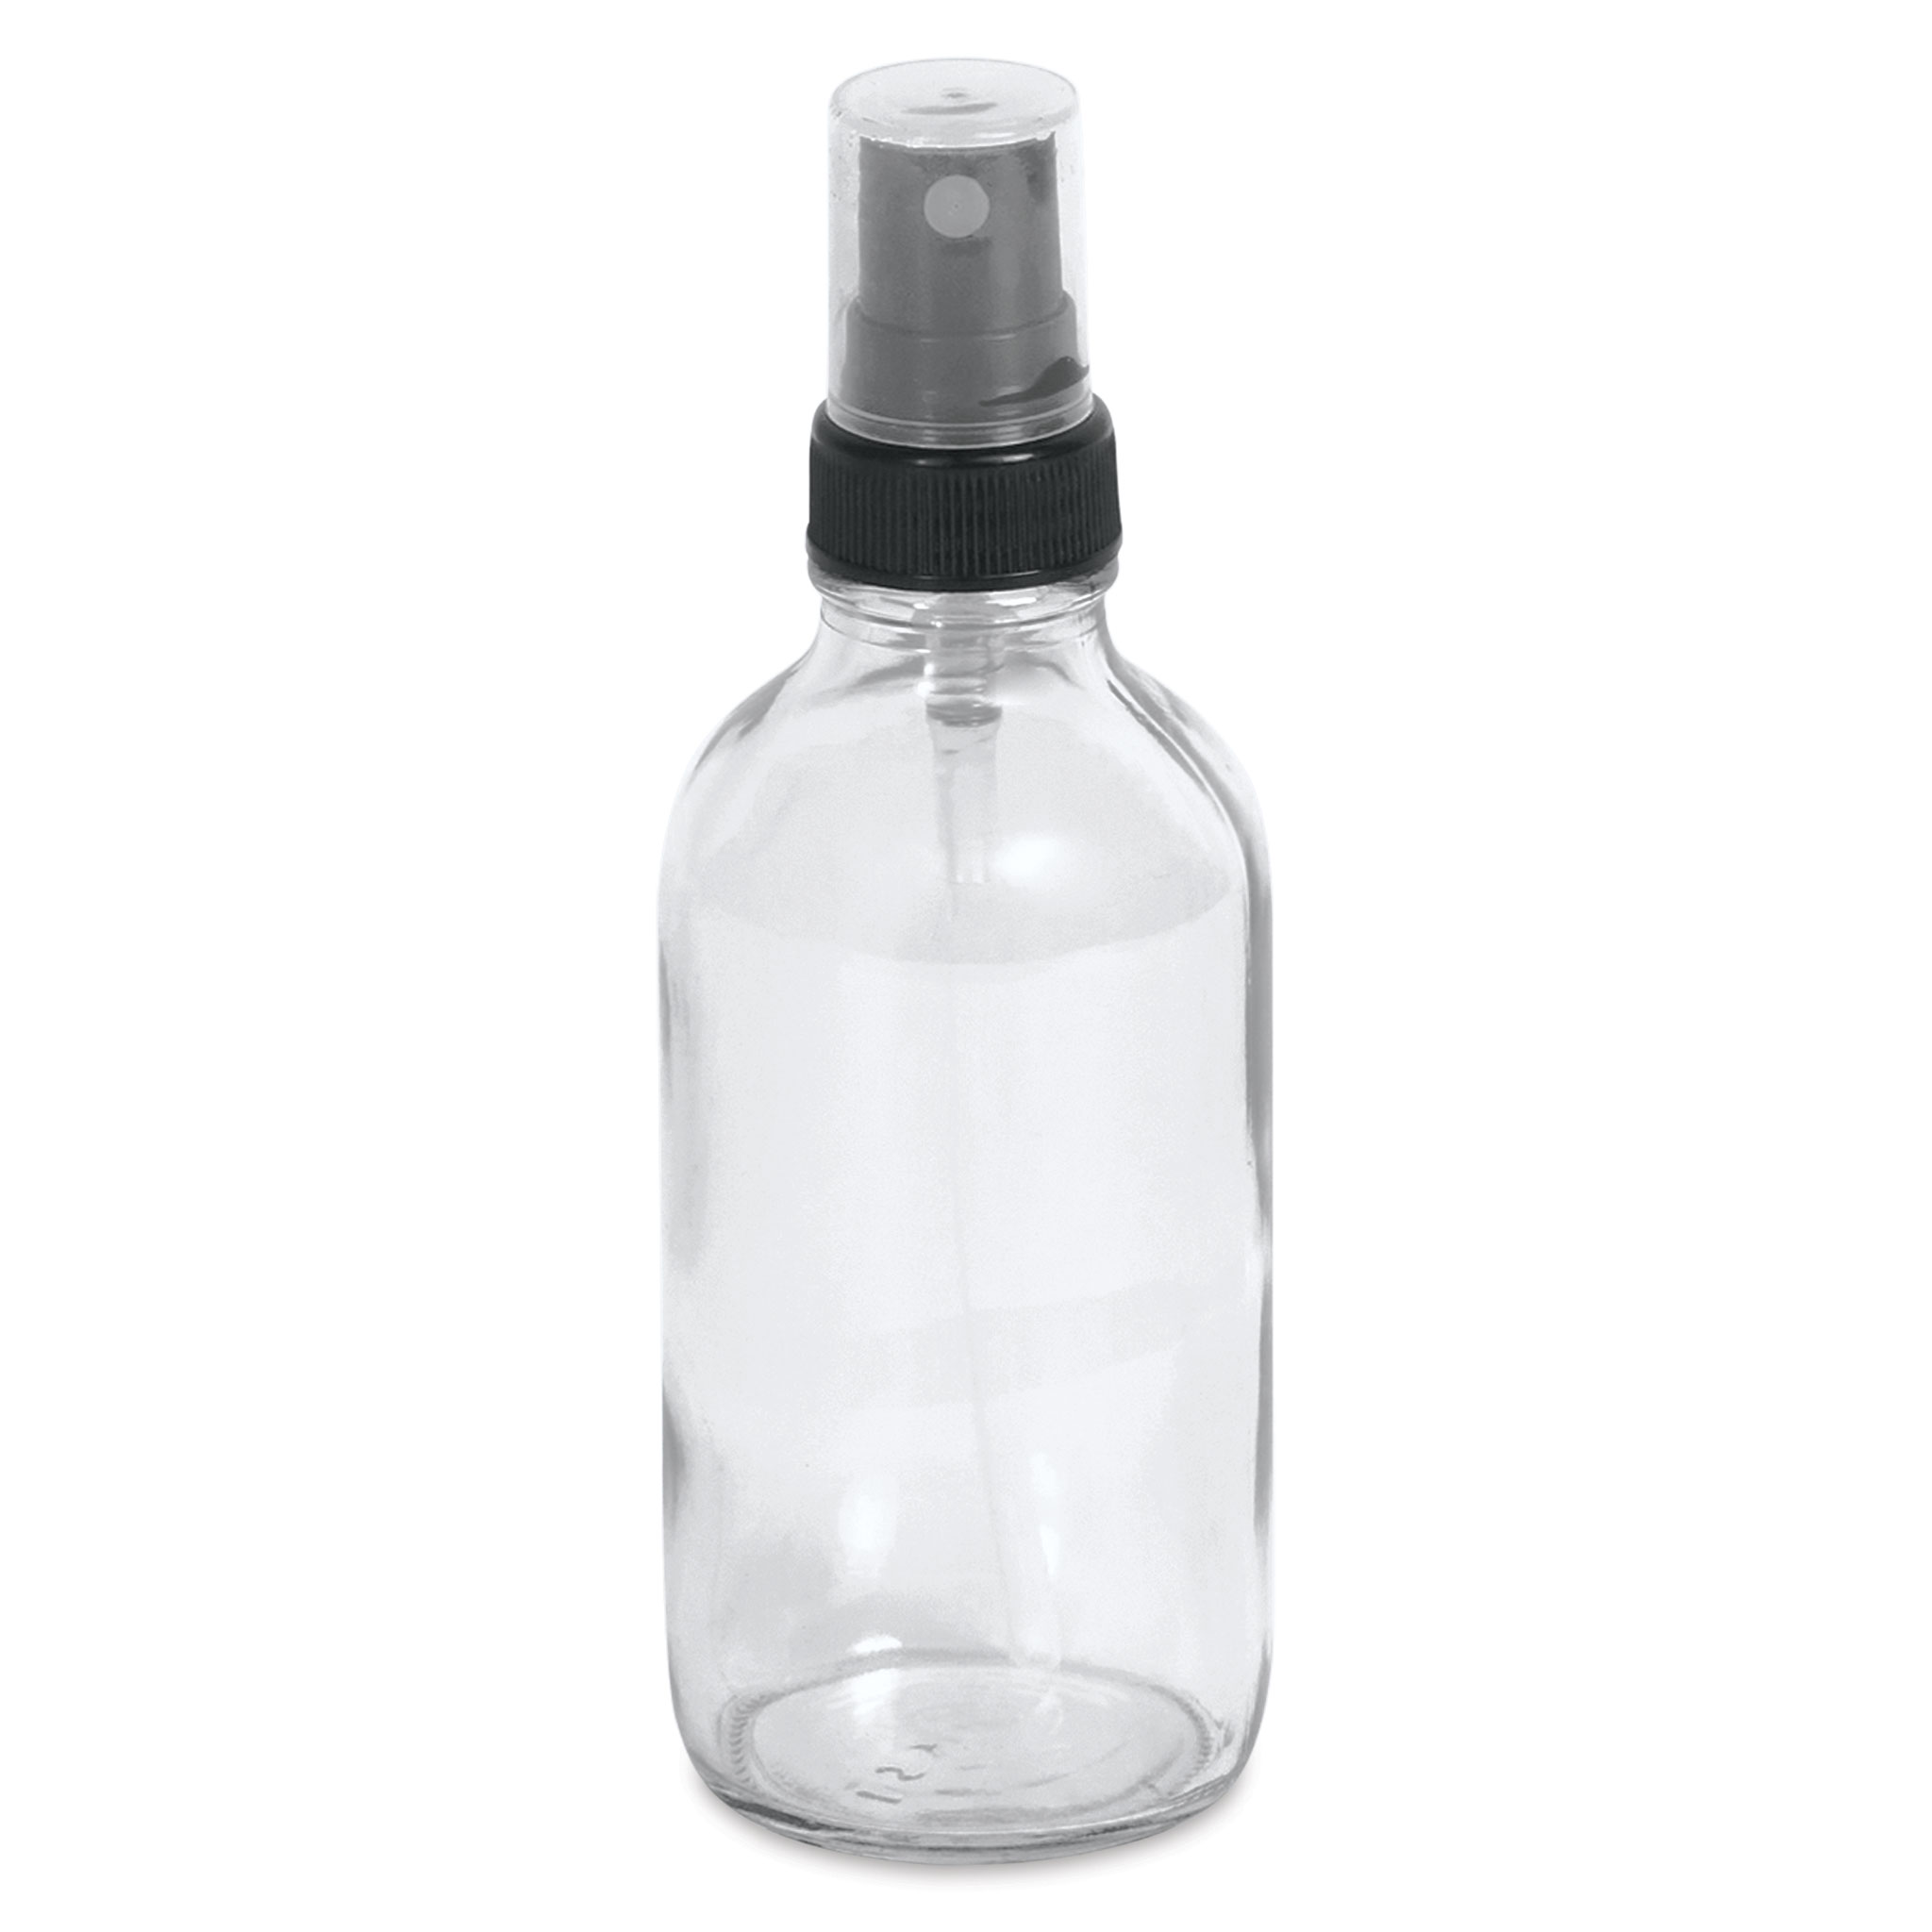 Clear Cylinder Spray Bottles - 4 oz S-21662 - Uline